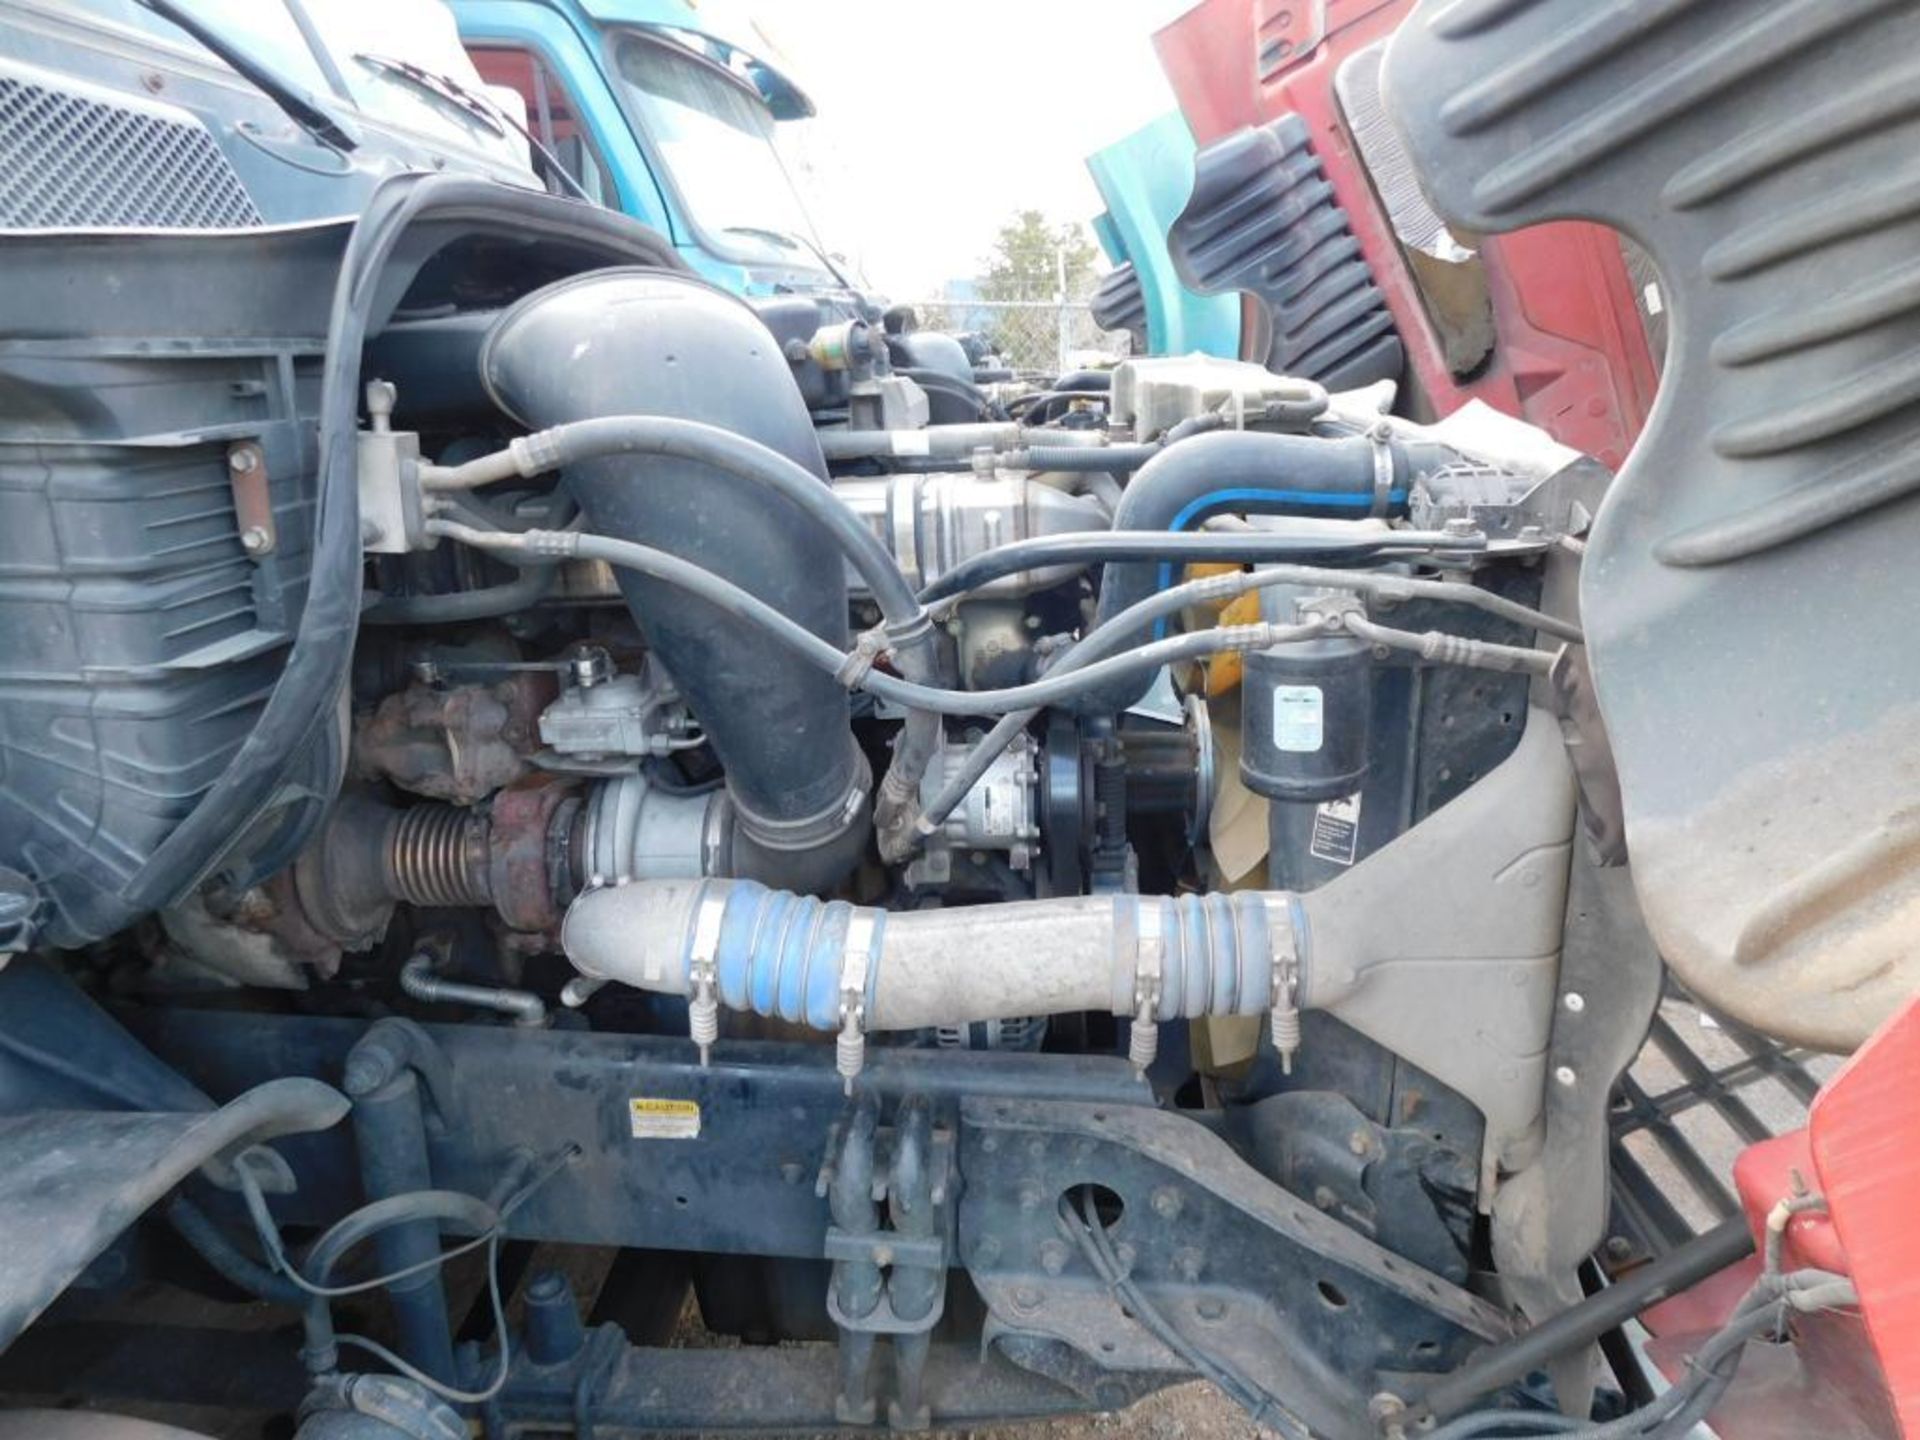 2011 Freightliner Cascadia 125 Truck Tractor, Turbo Diesel, VIN 1FUJGLDR4BLAV6742, (Red #103) - Image 8 of 19